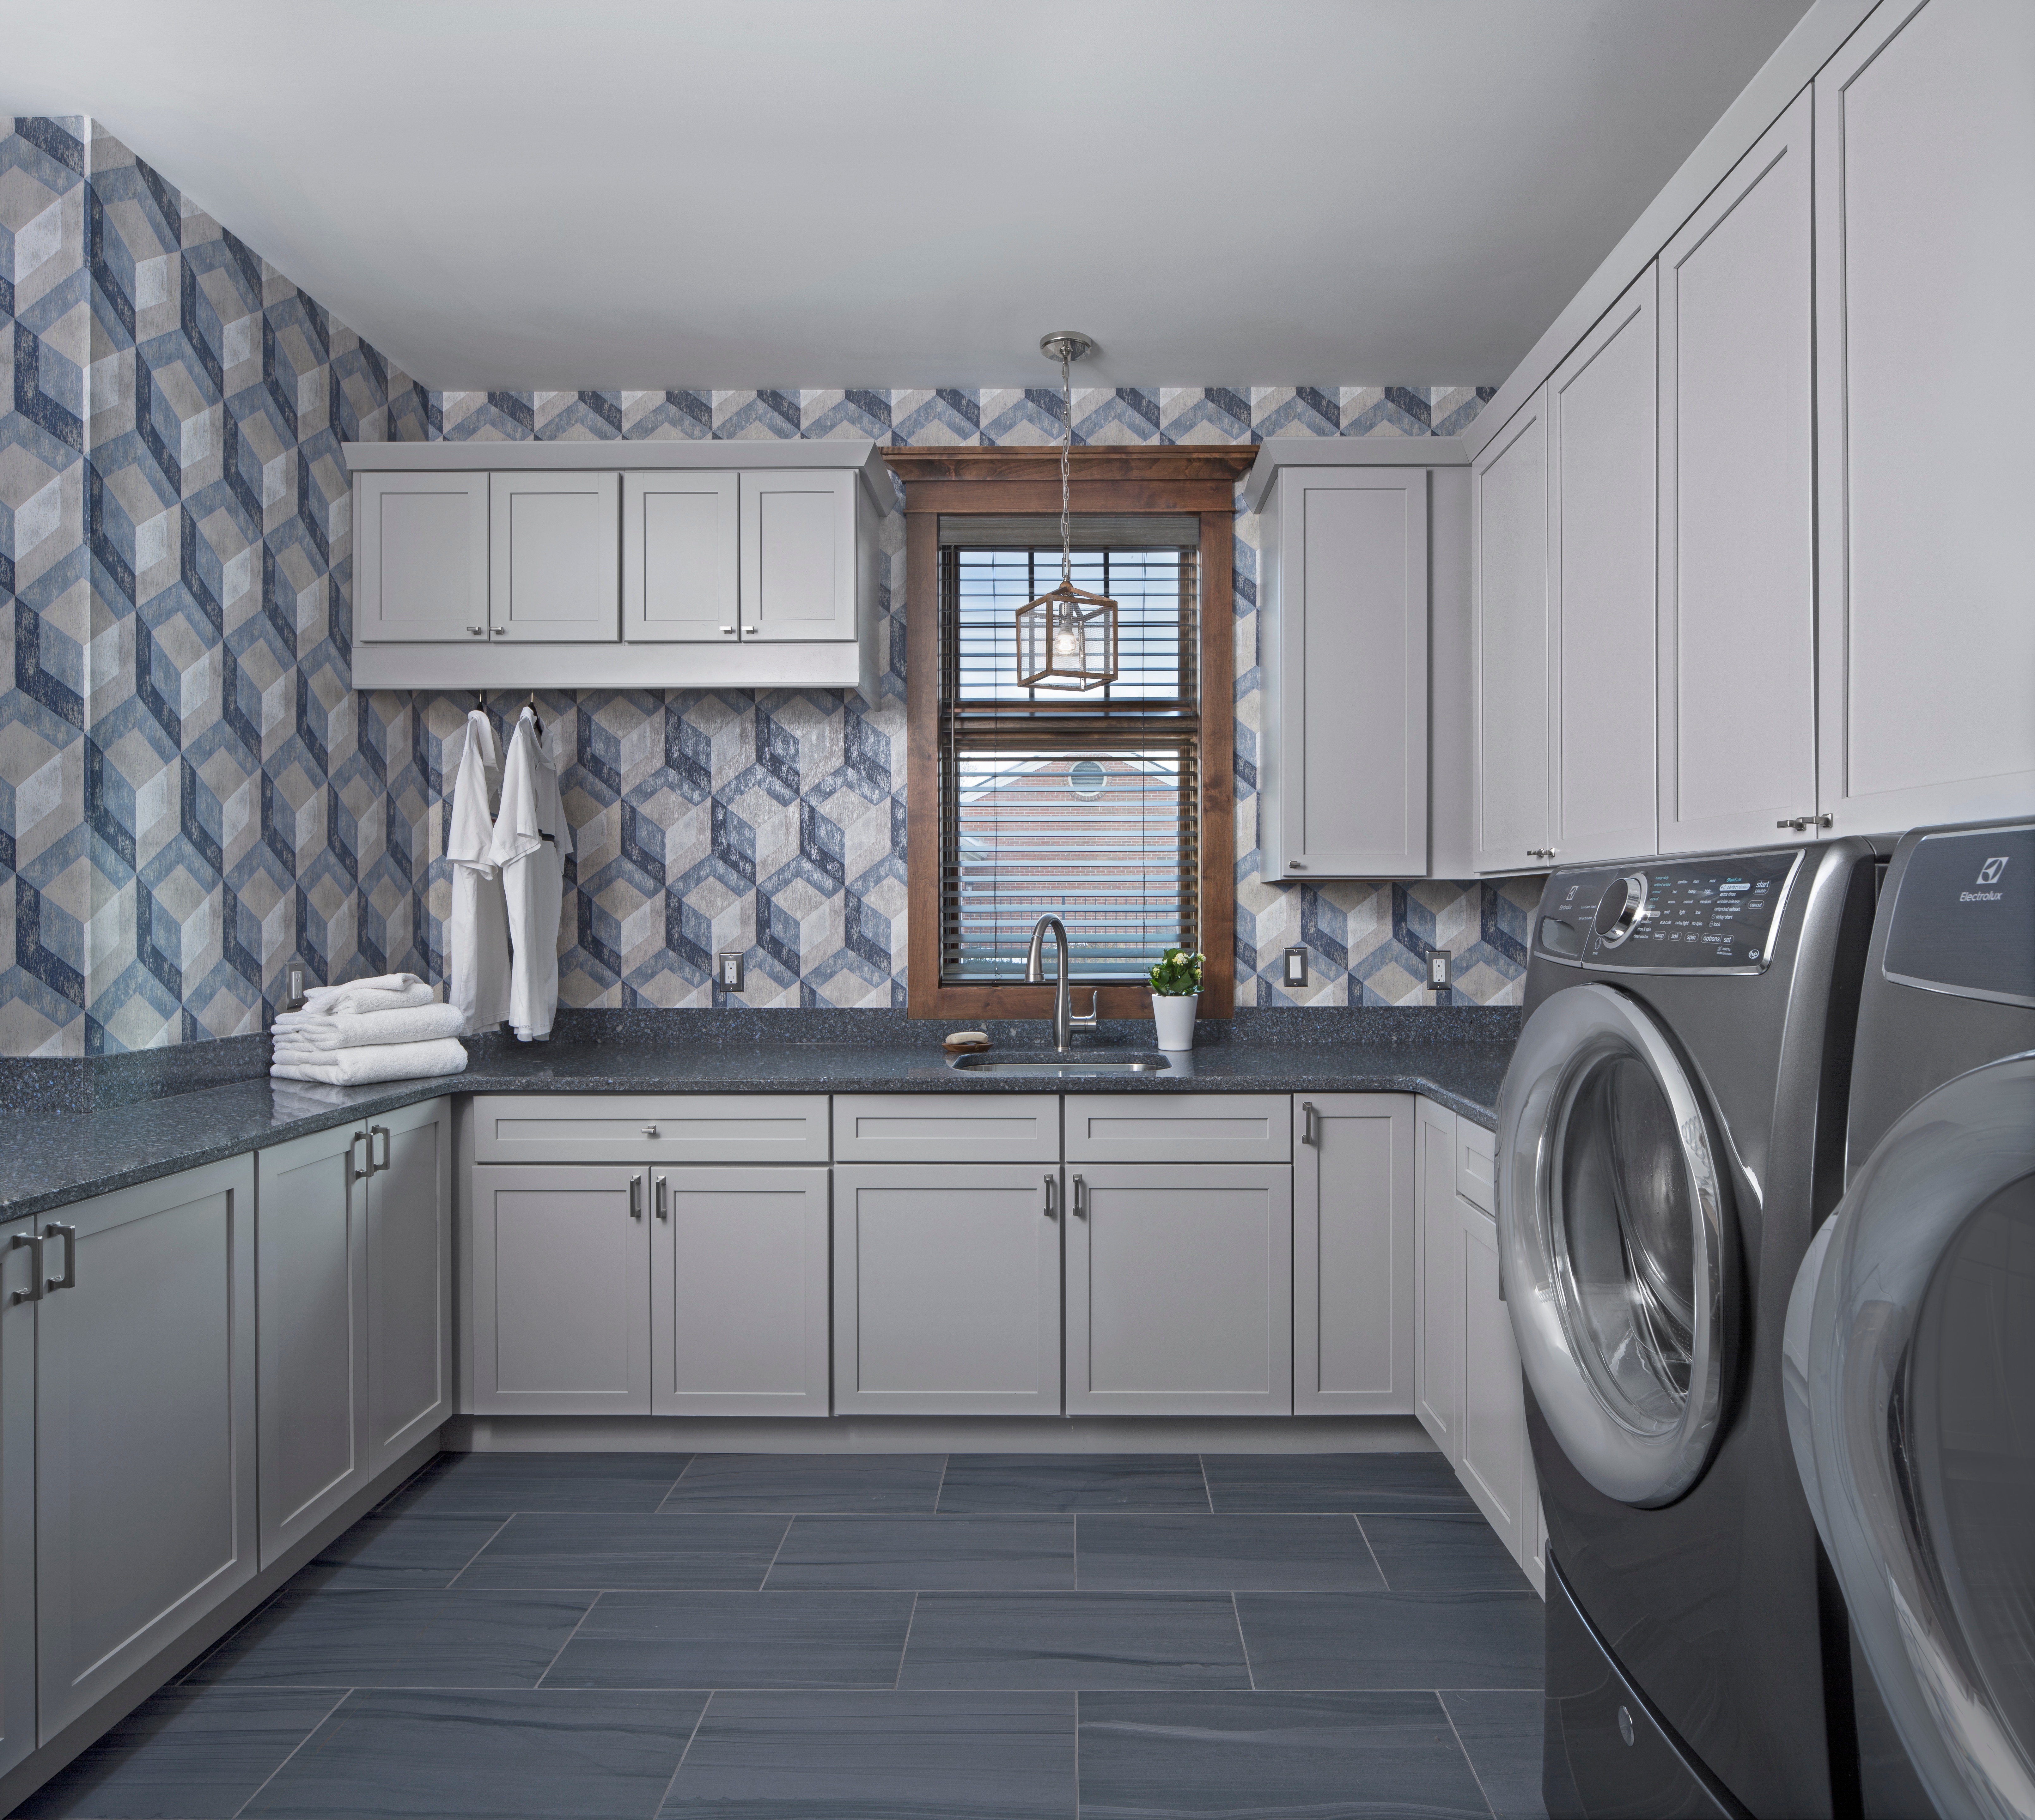 KSI_Transitional_Laundry Room-gray cabinets